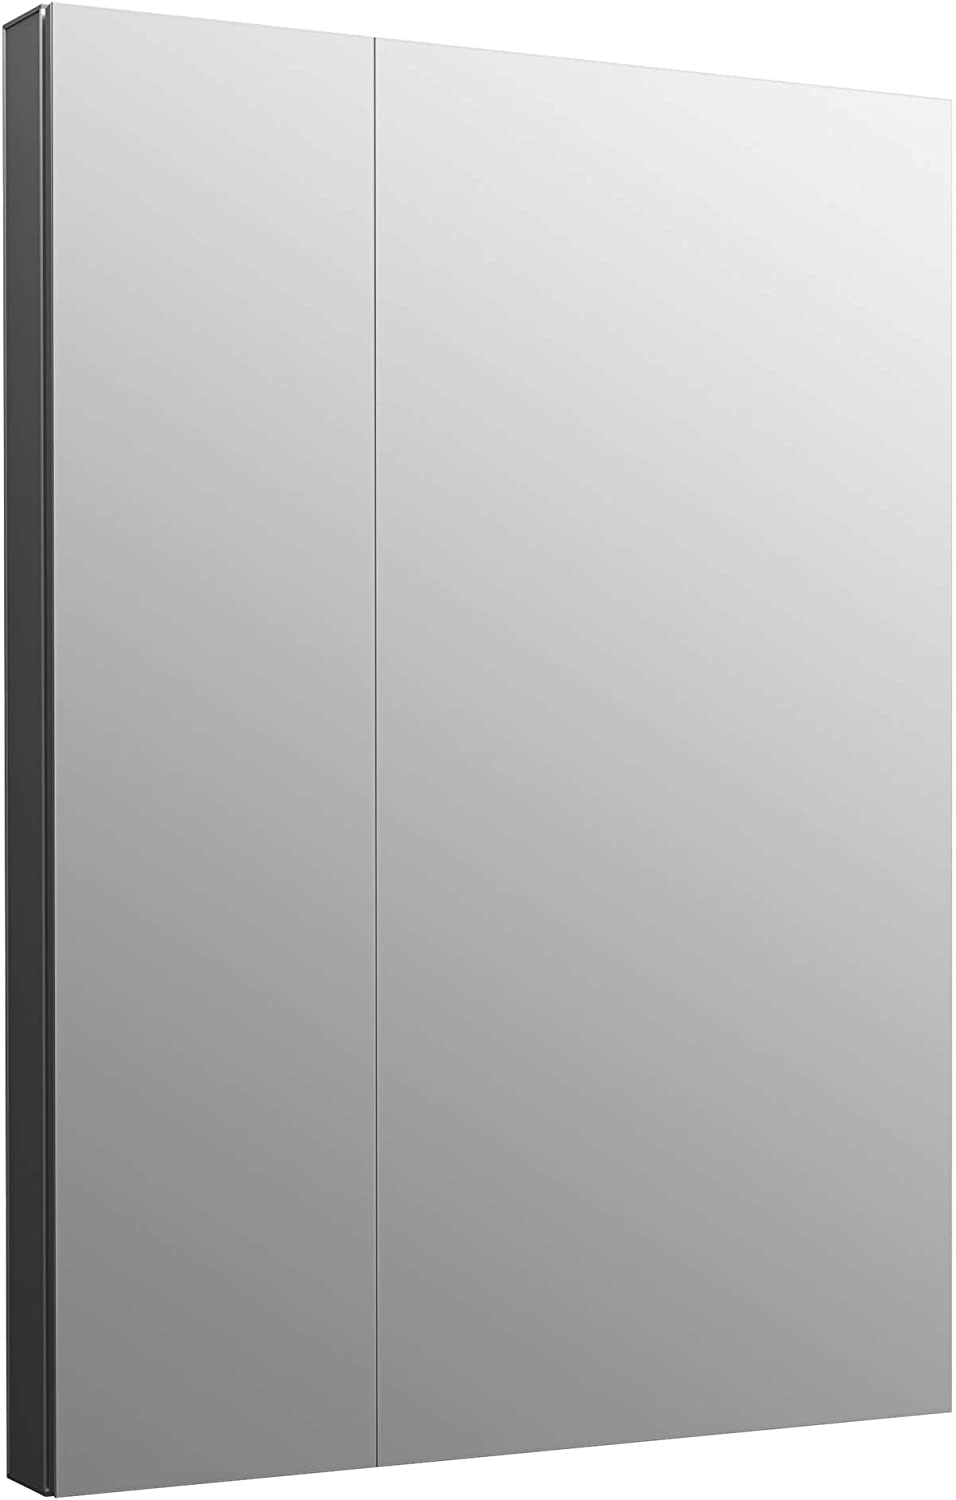 Kohler Maxstow Mirror Cabinets 762mm x 1016mm